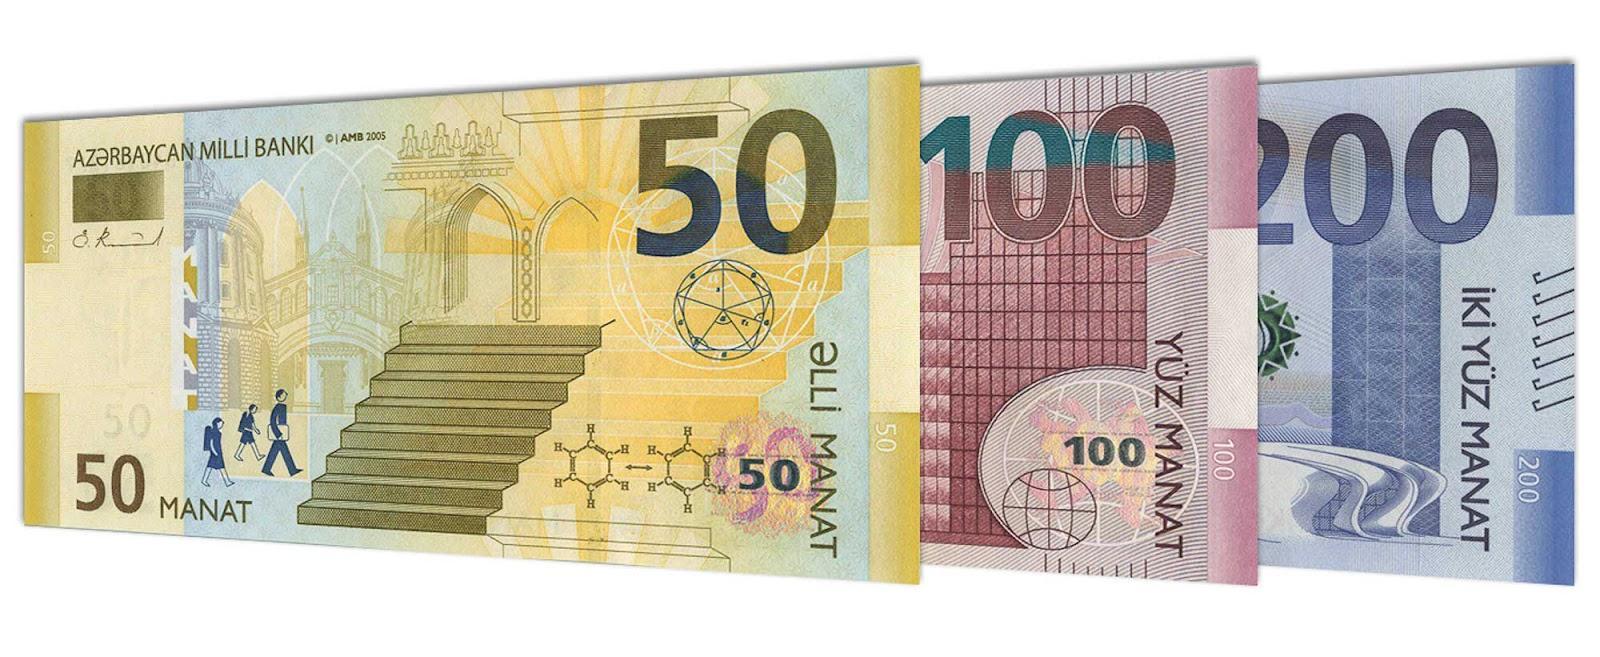 Azerbaijan manat banknote series
